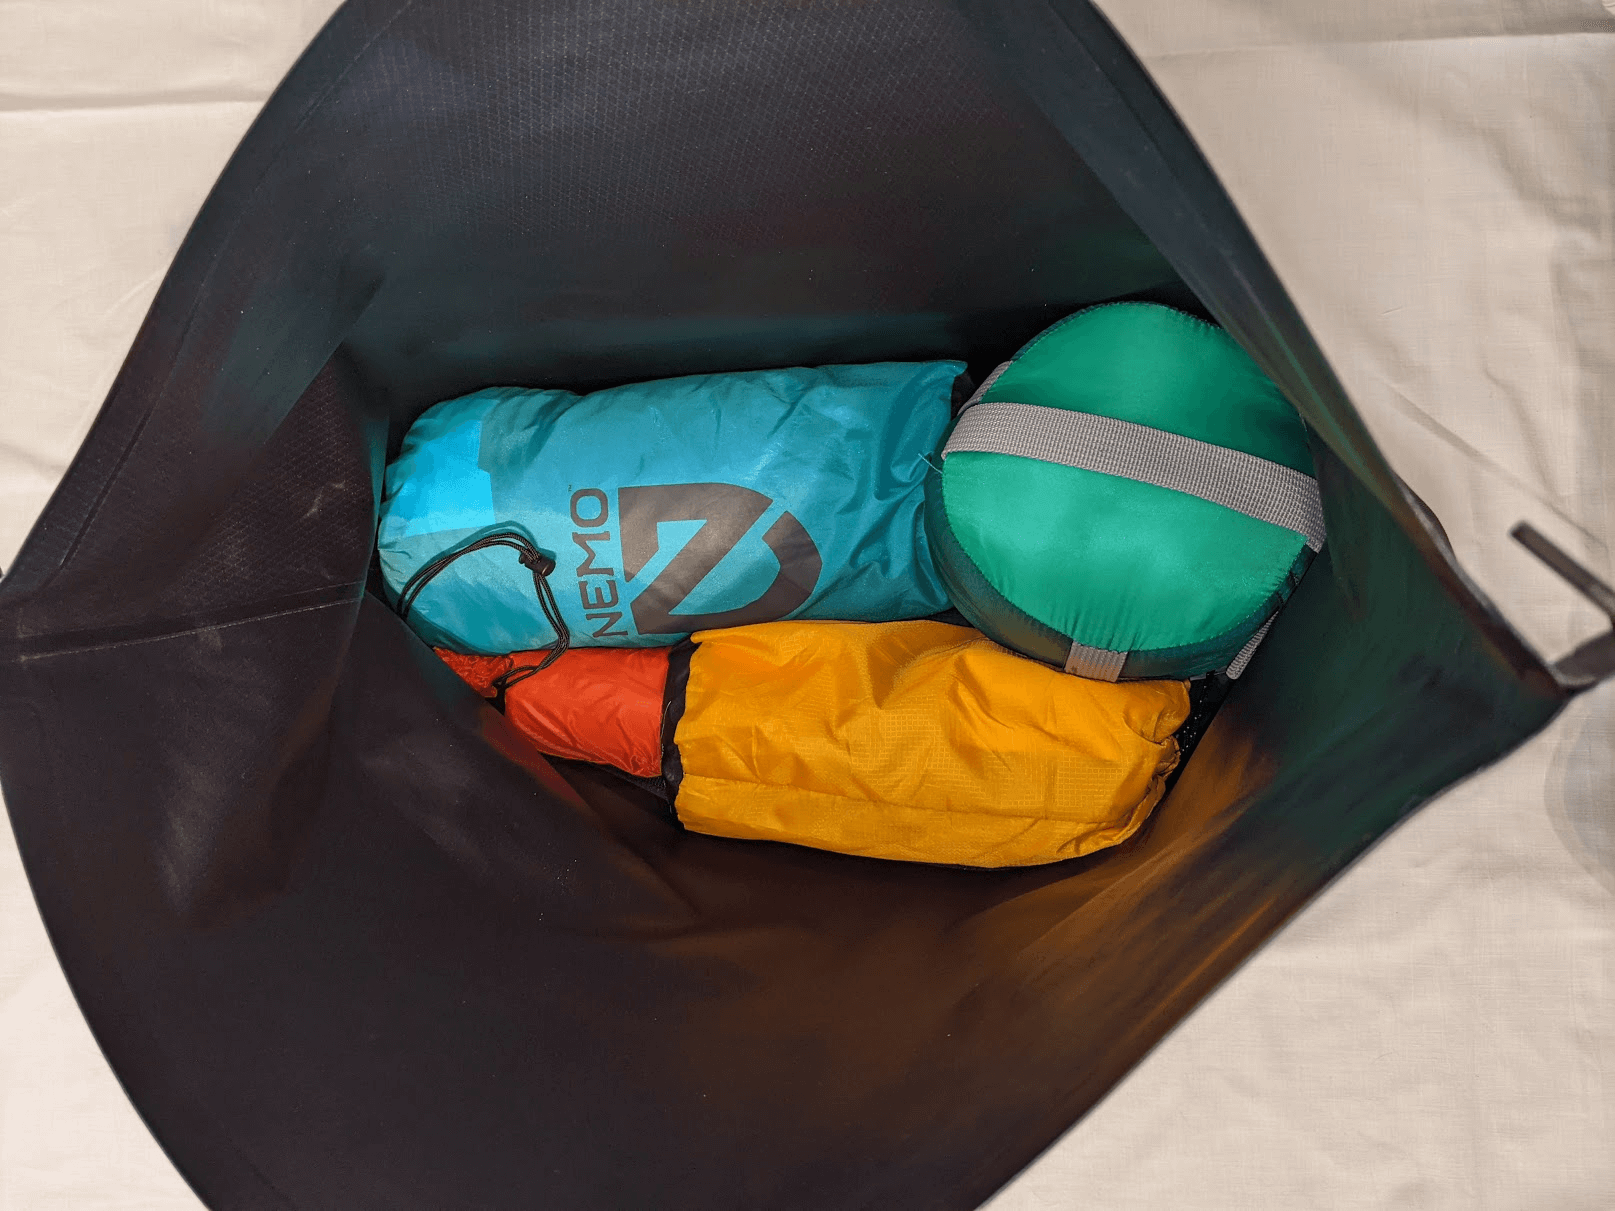 Tailfin Trunk Top Bag inside